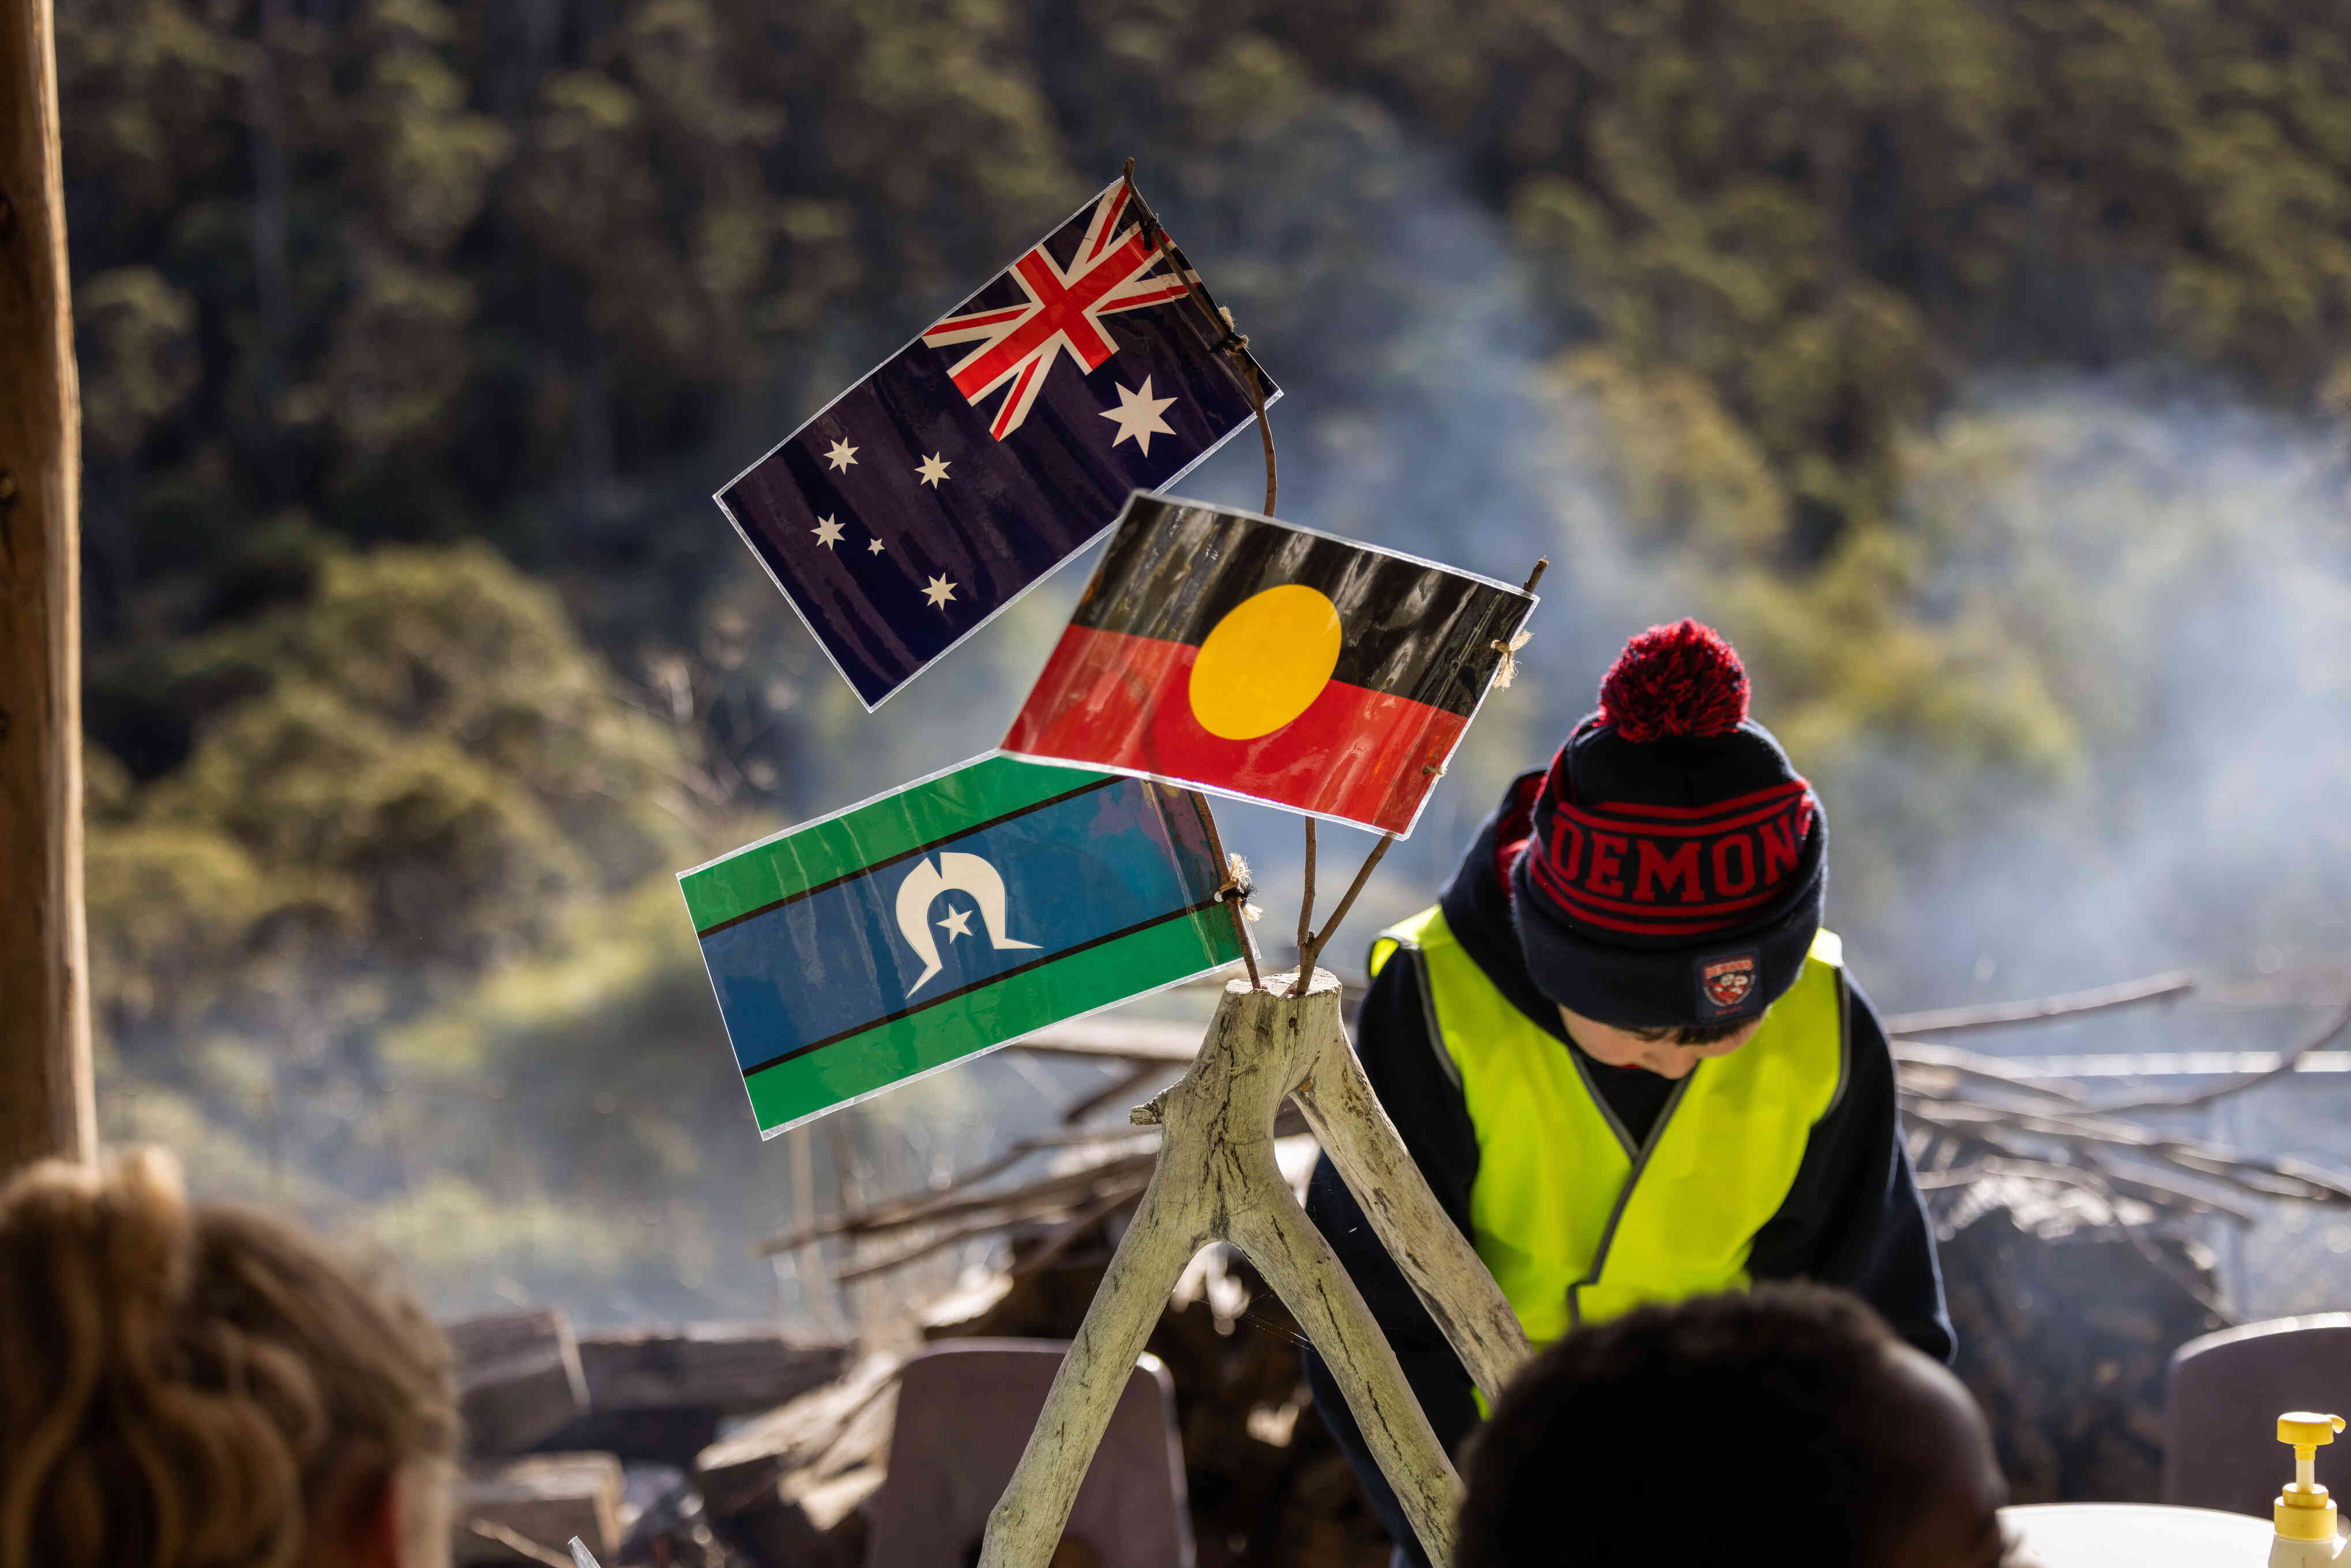 Aboriginal, Torres Strait Island and Australian flags